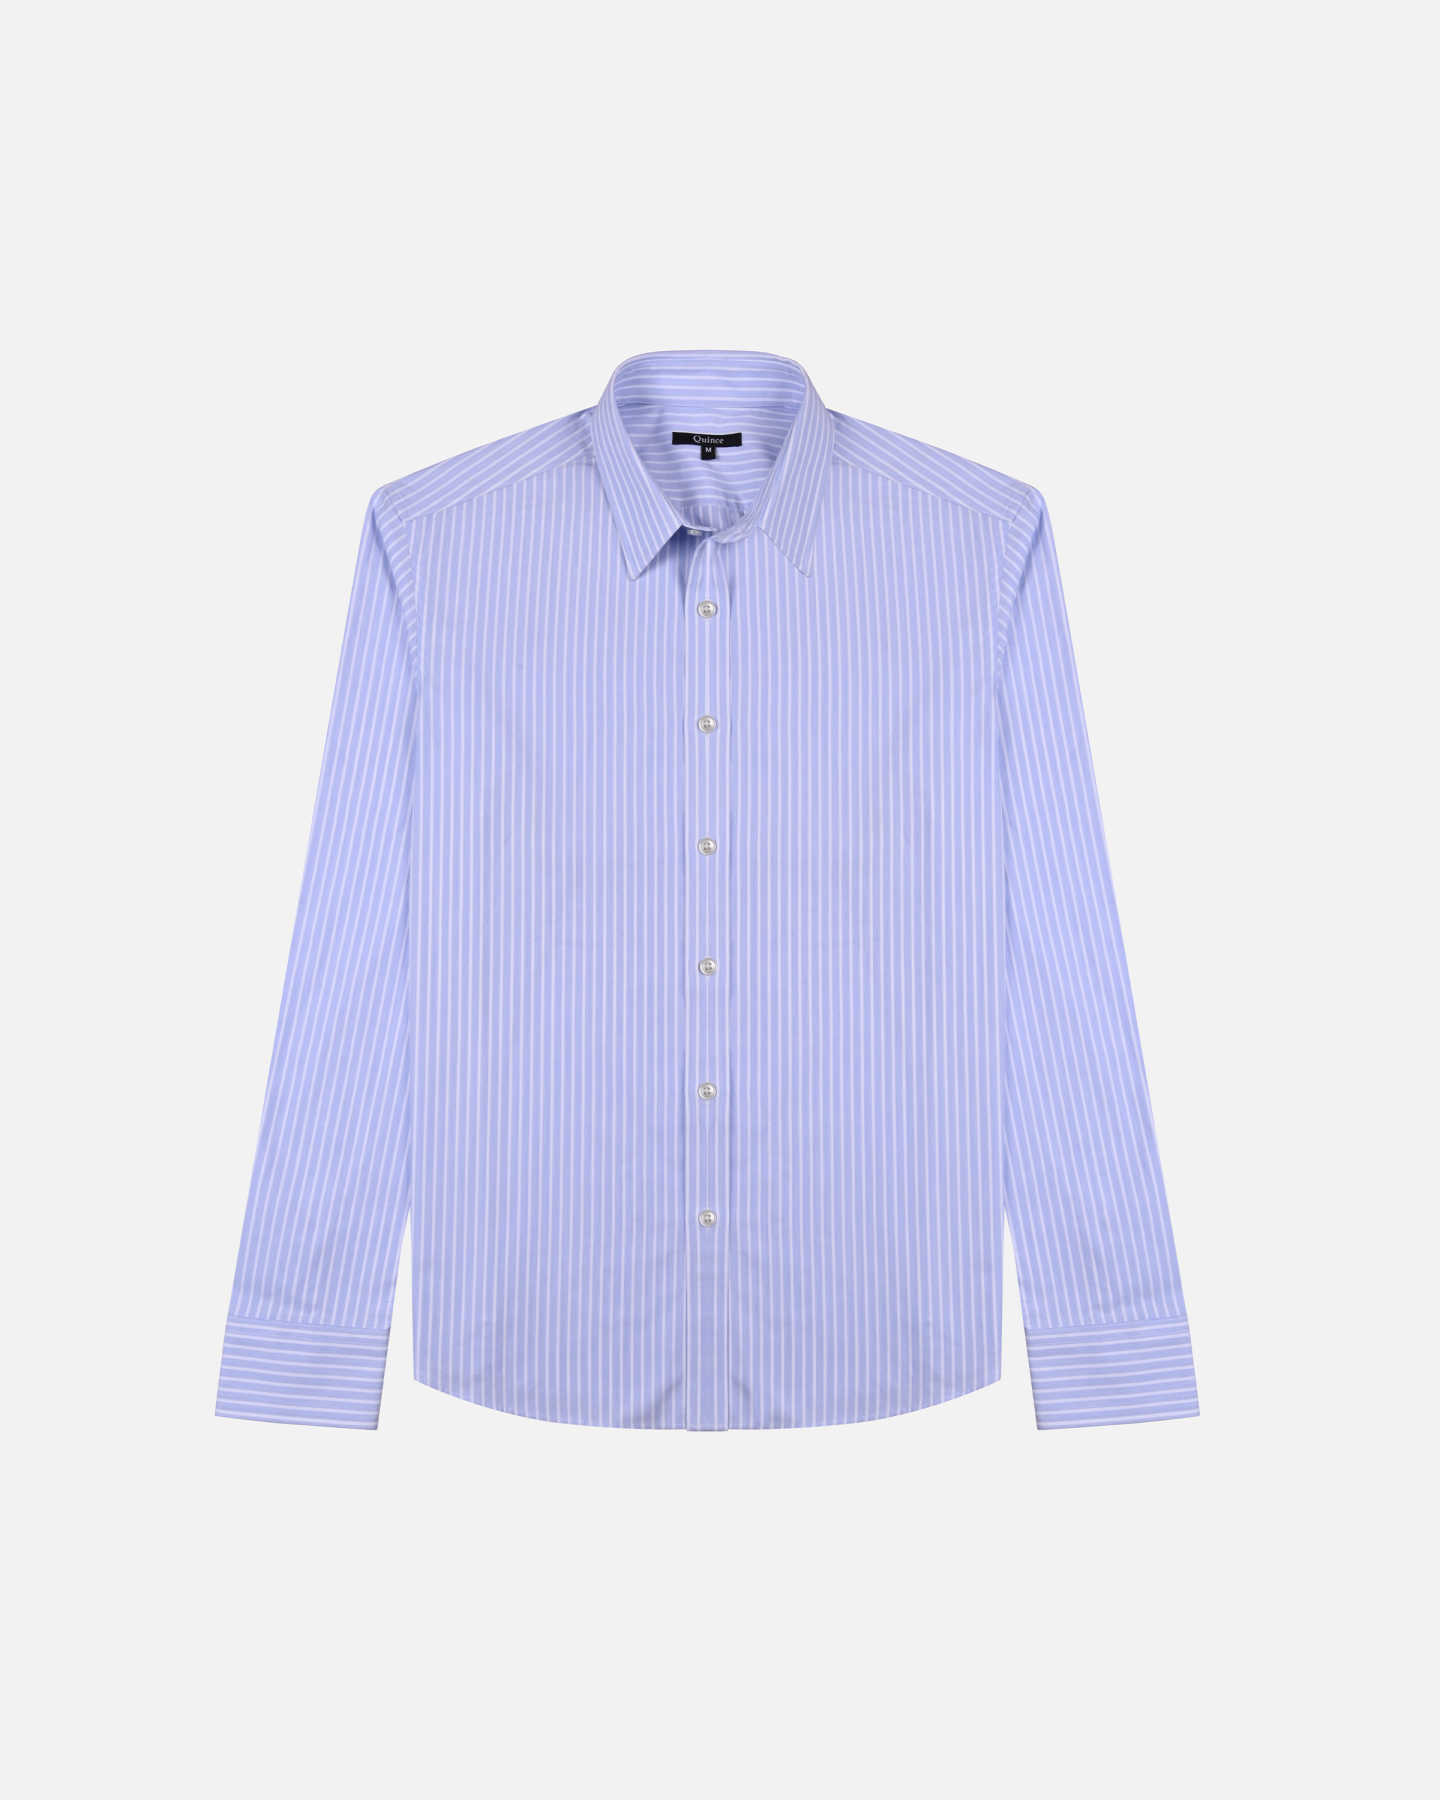  Luxe Button Down Shirt - Light Blue/White